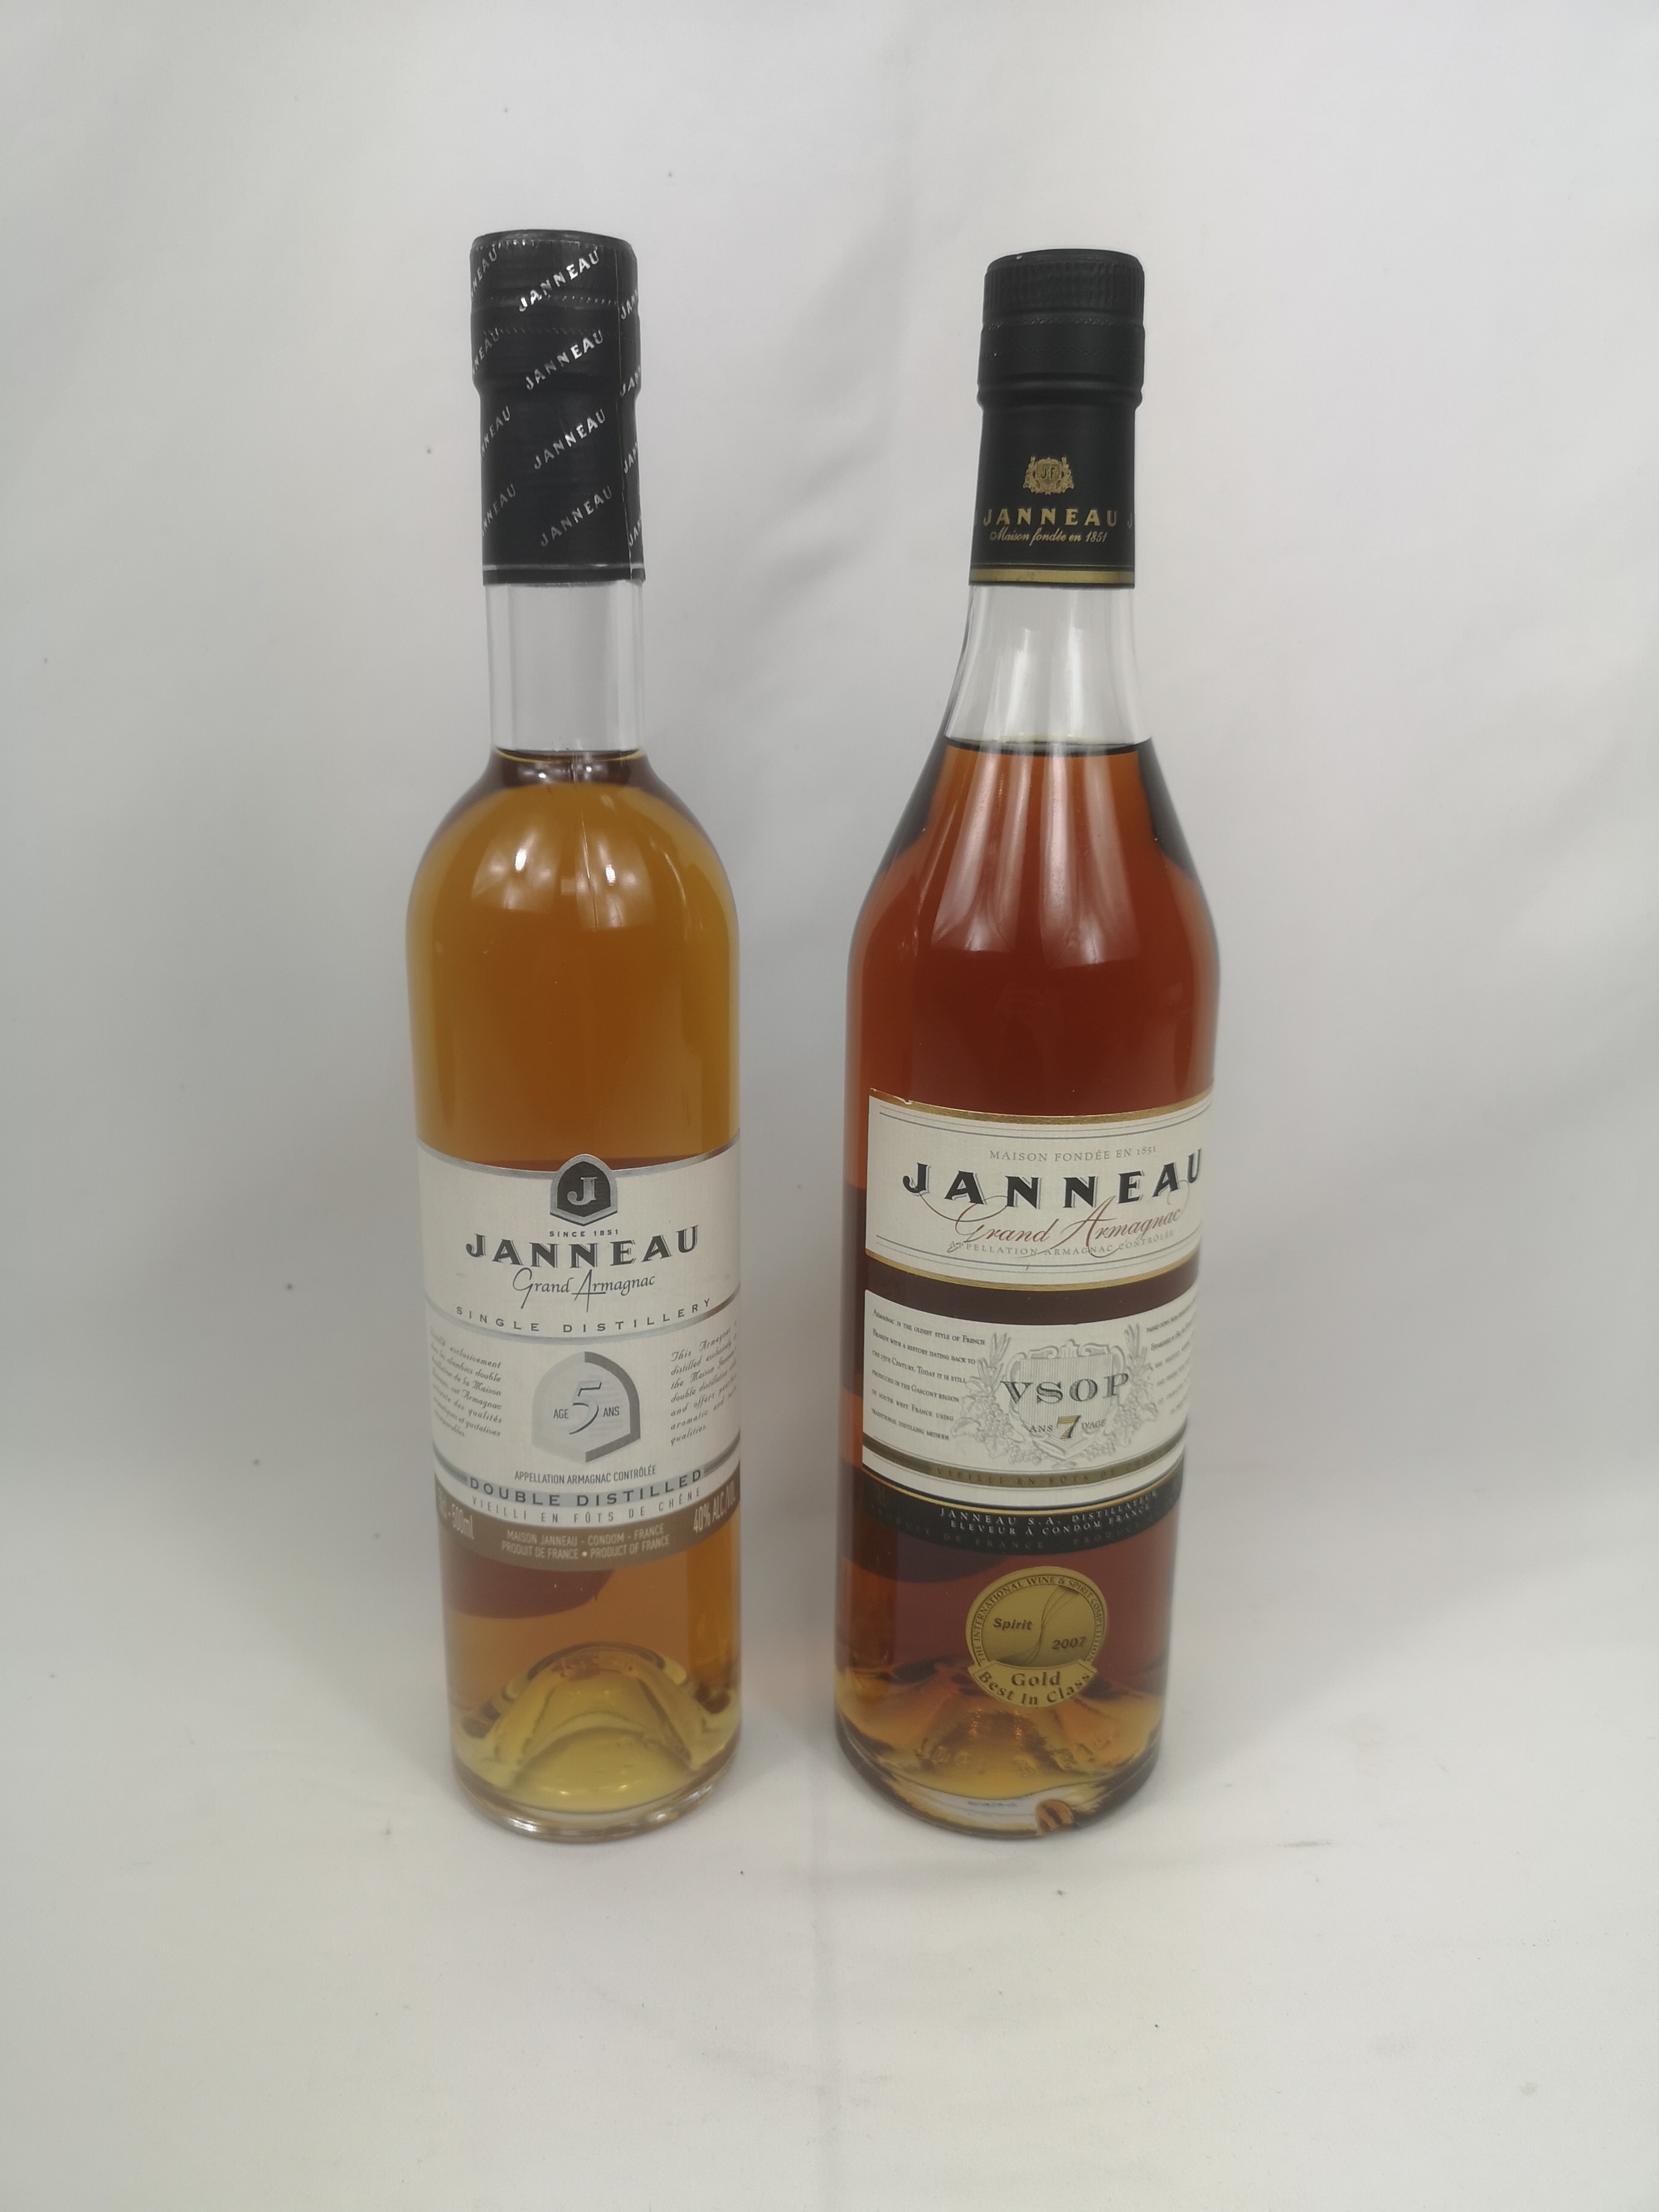 Two bottles of Janneau Grand Armagnac